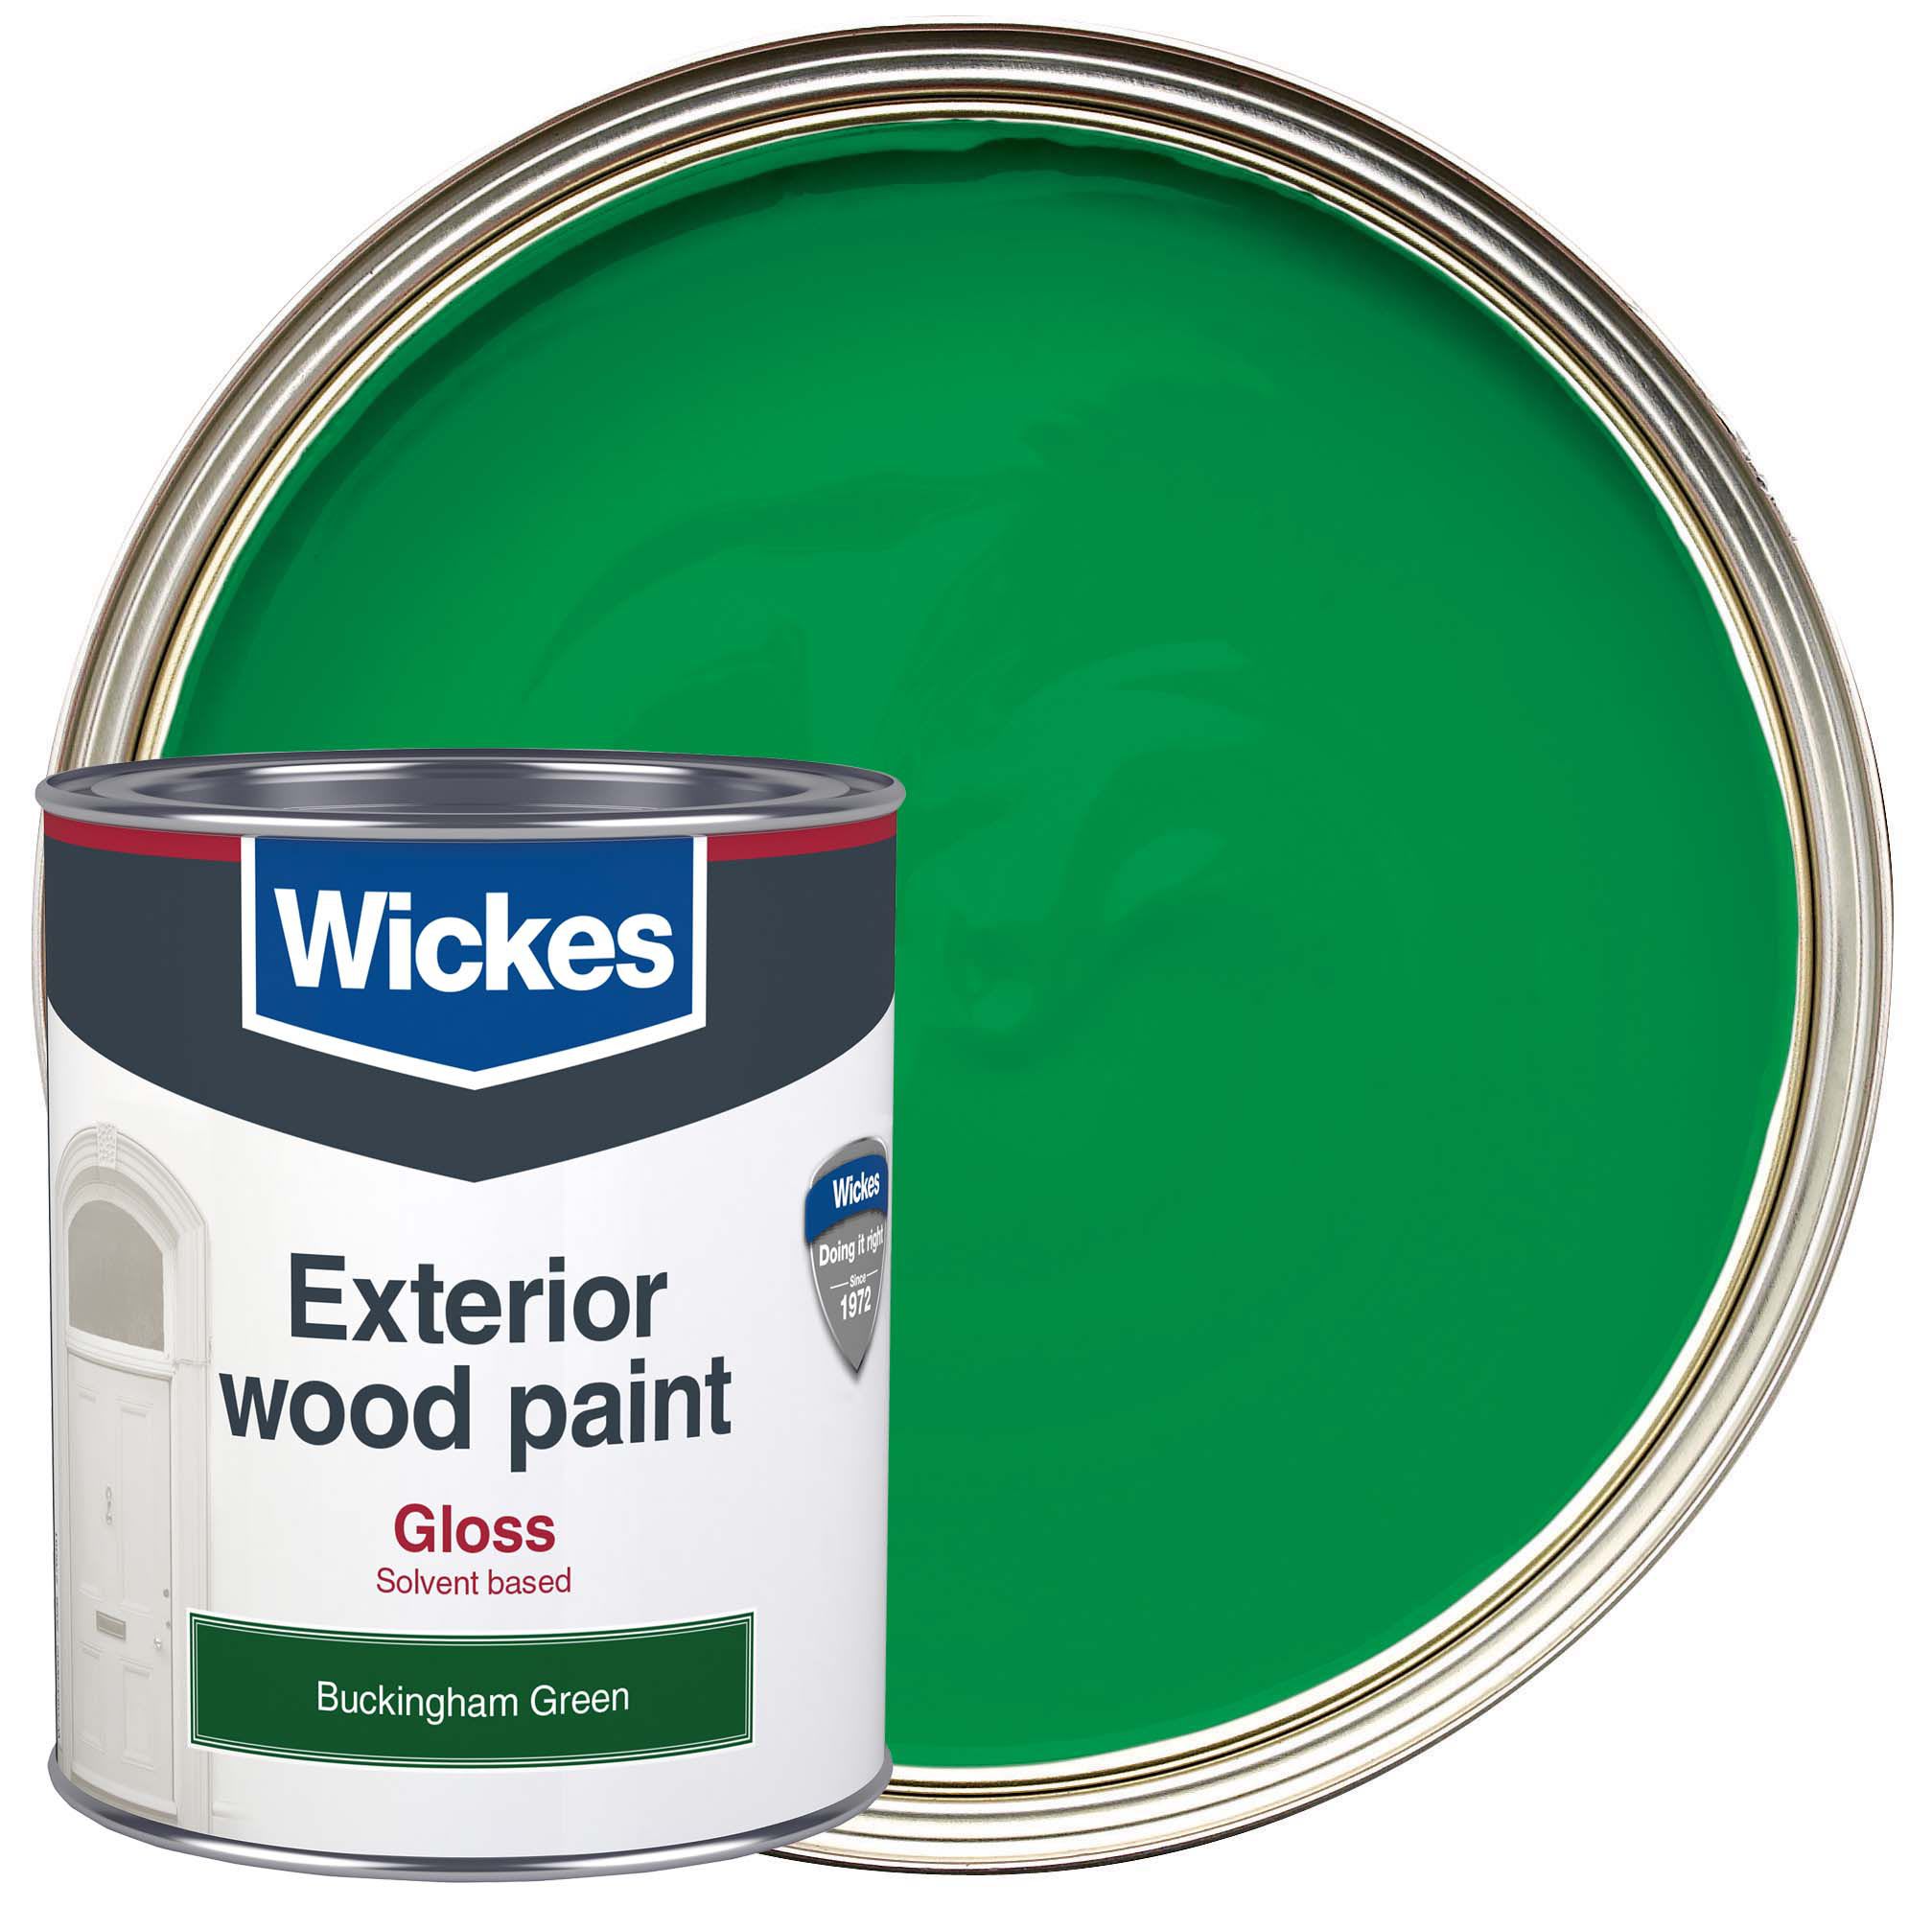 Wickes Exterior Gloss Paint - Buckingham Green -